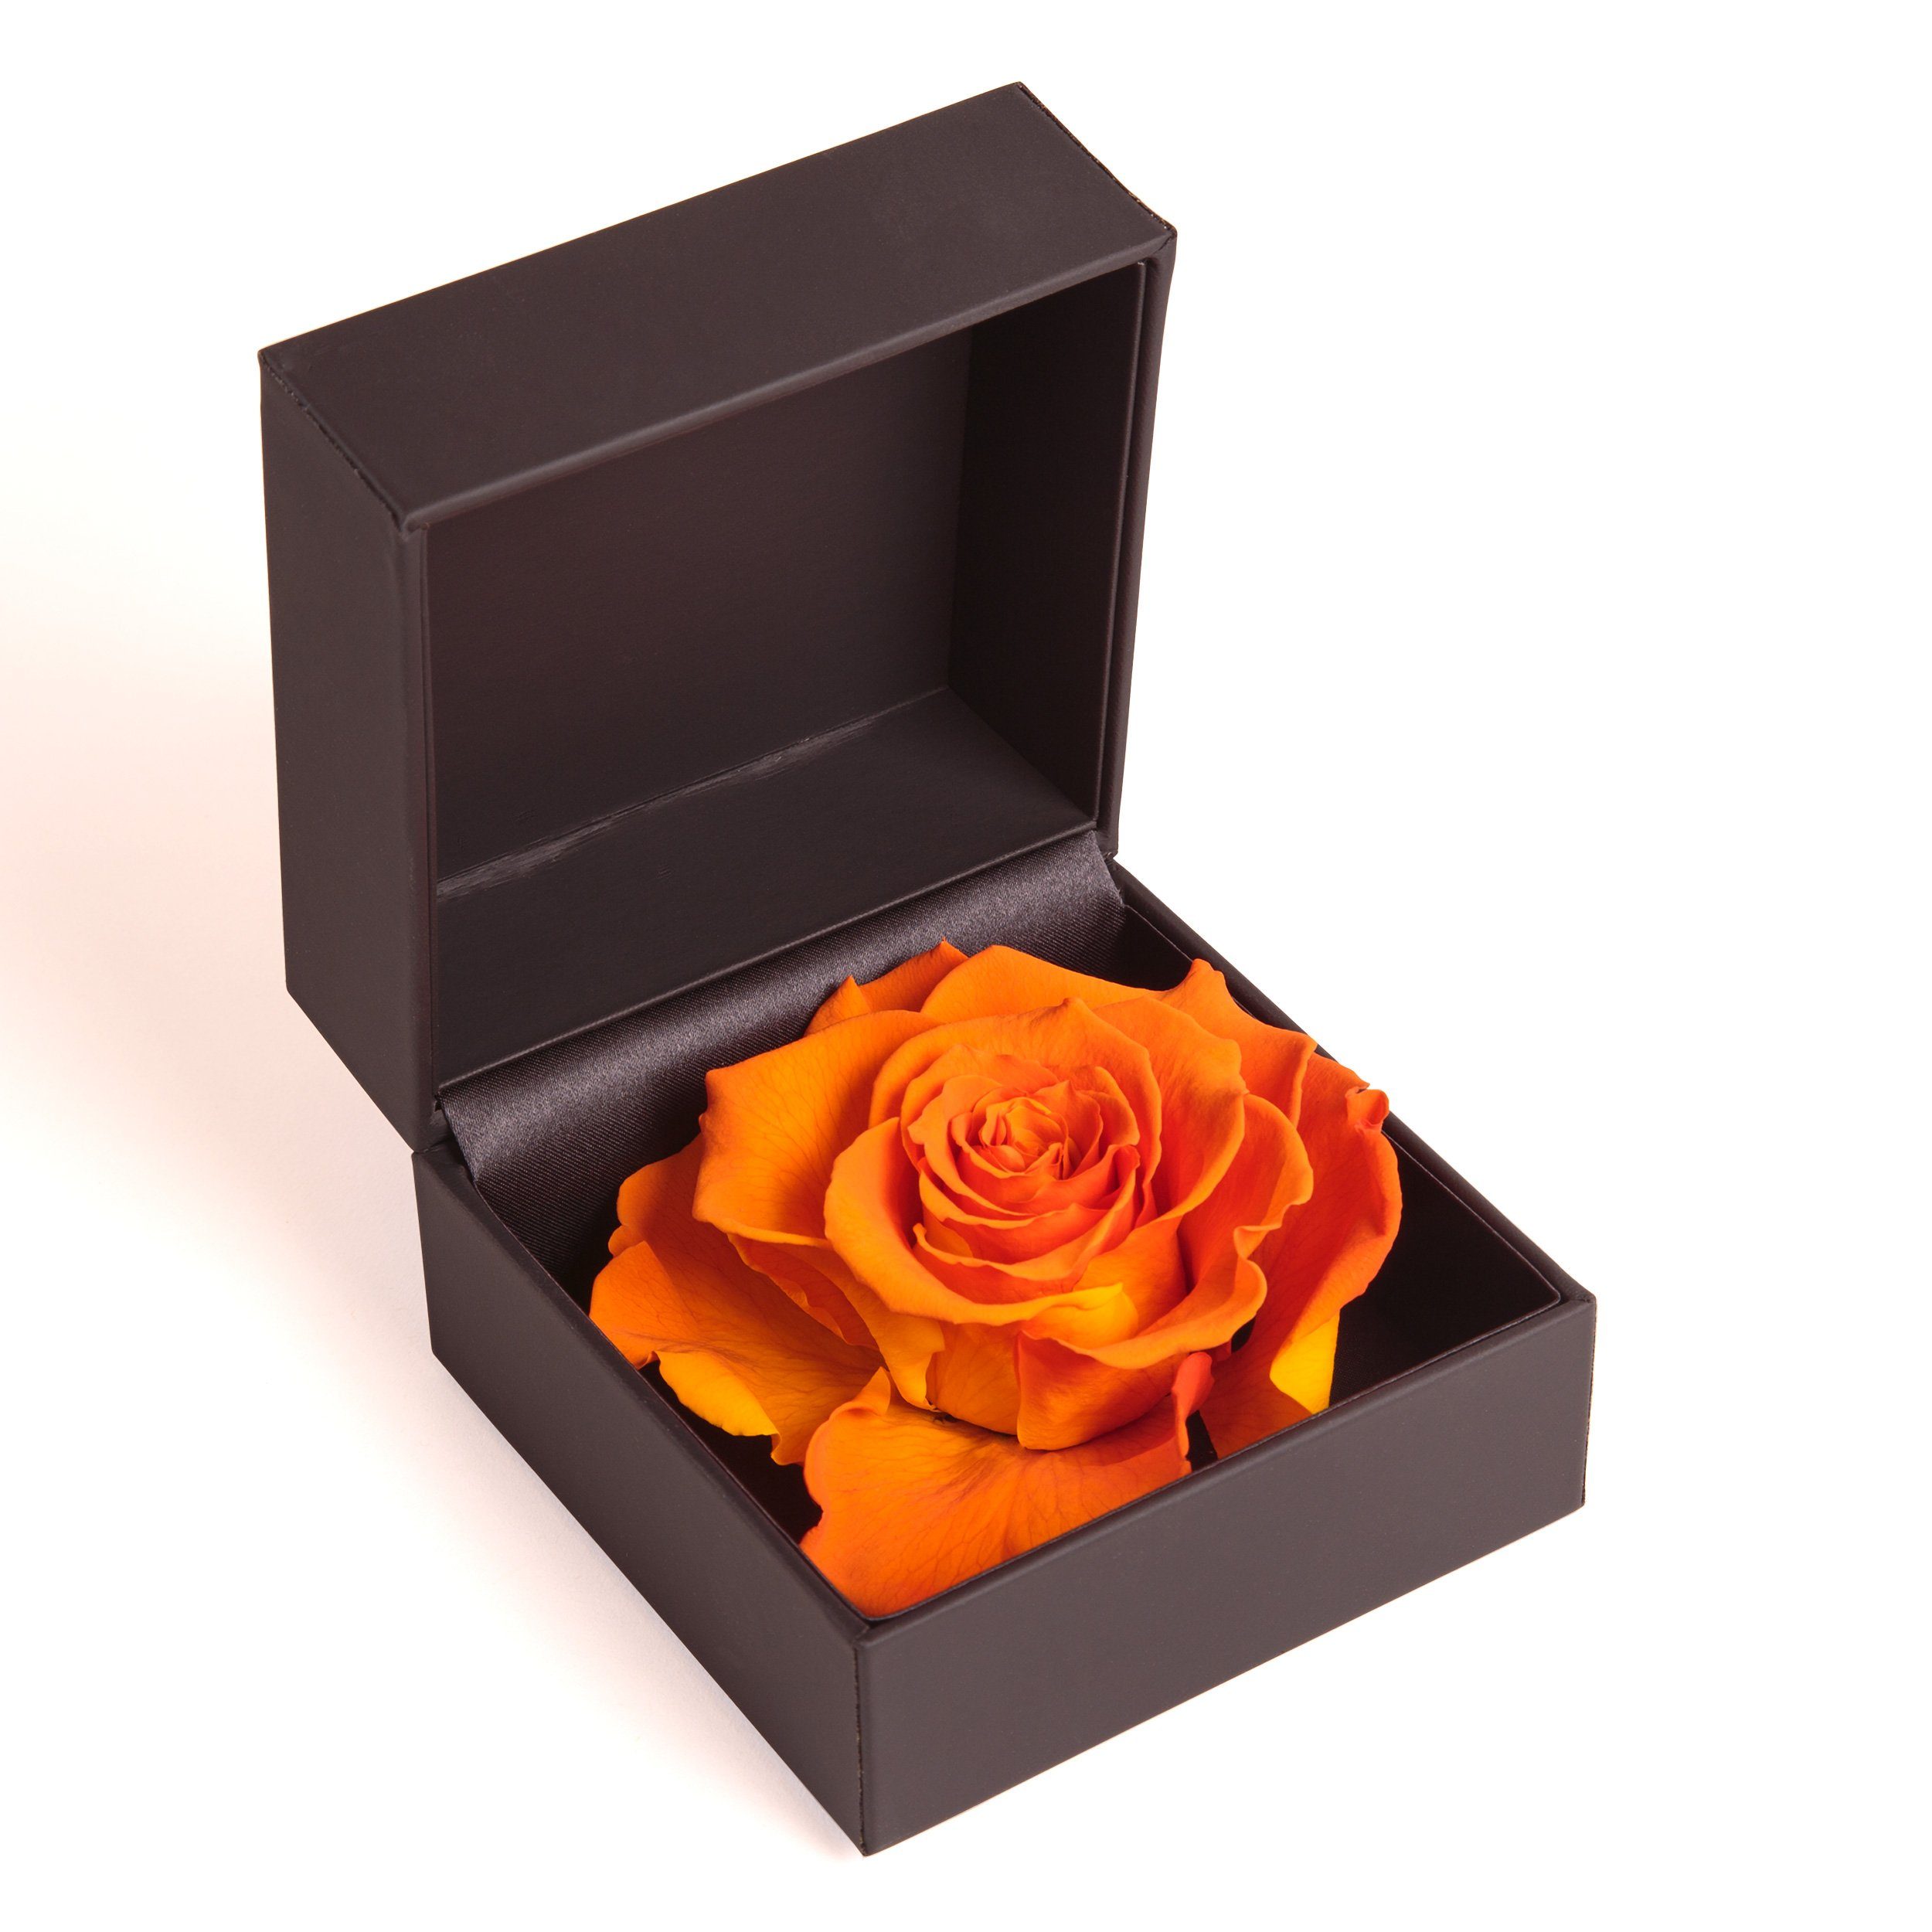 cm, Höhe SCHULZ Orange Kunstblume Heidelberg, Groß Ringbox 9 Rose in ROSEMARIE Box konserviert Langlebige Infinity Rose, Rosenbox Rose Ringdose